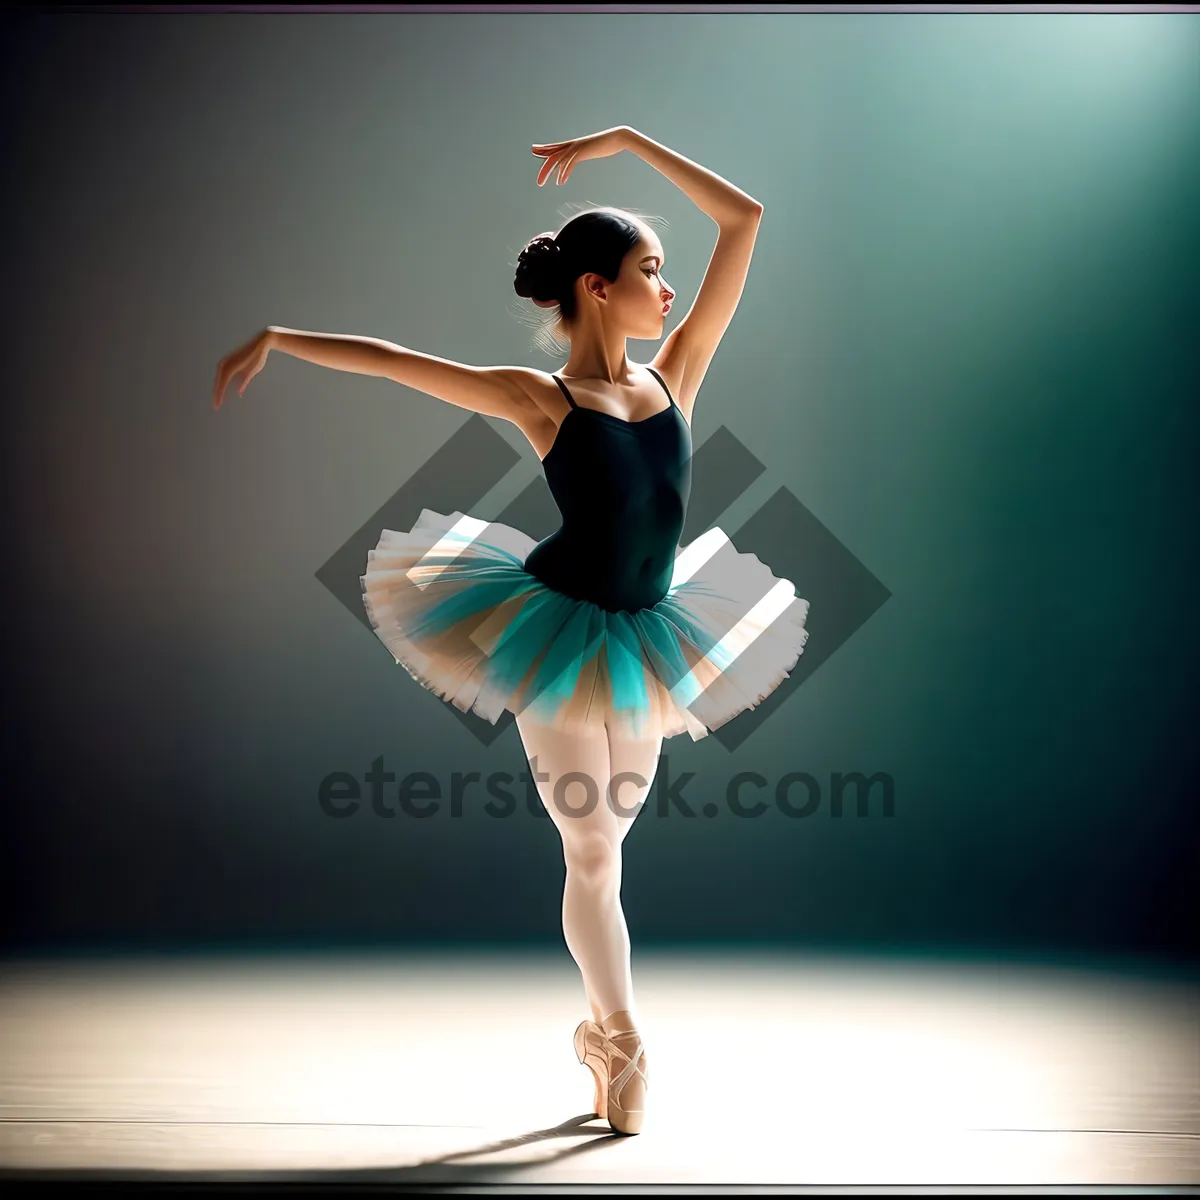 Picture of Elegant Ballet Dancer in Mid-Air Leap - Graceful Motion